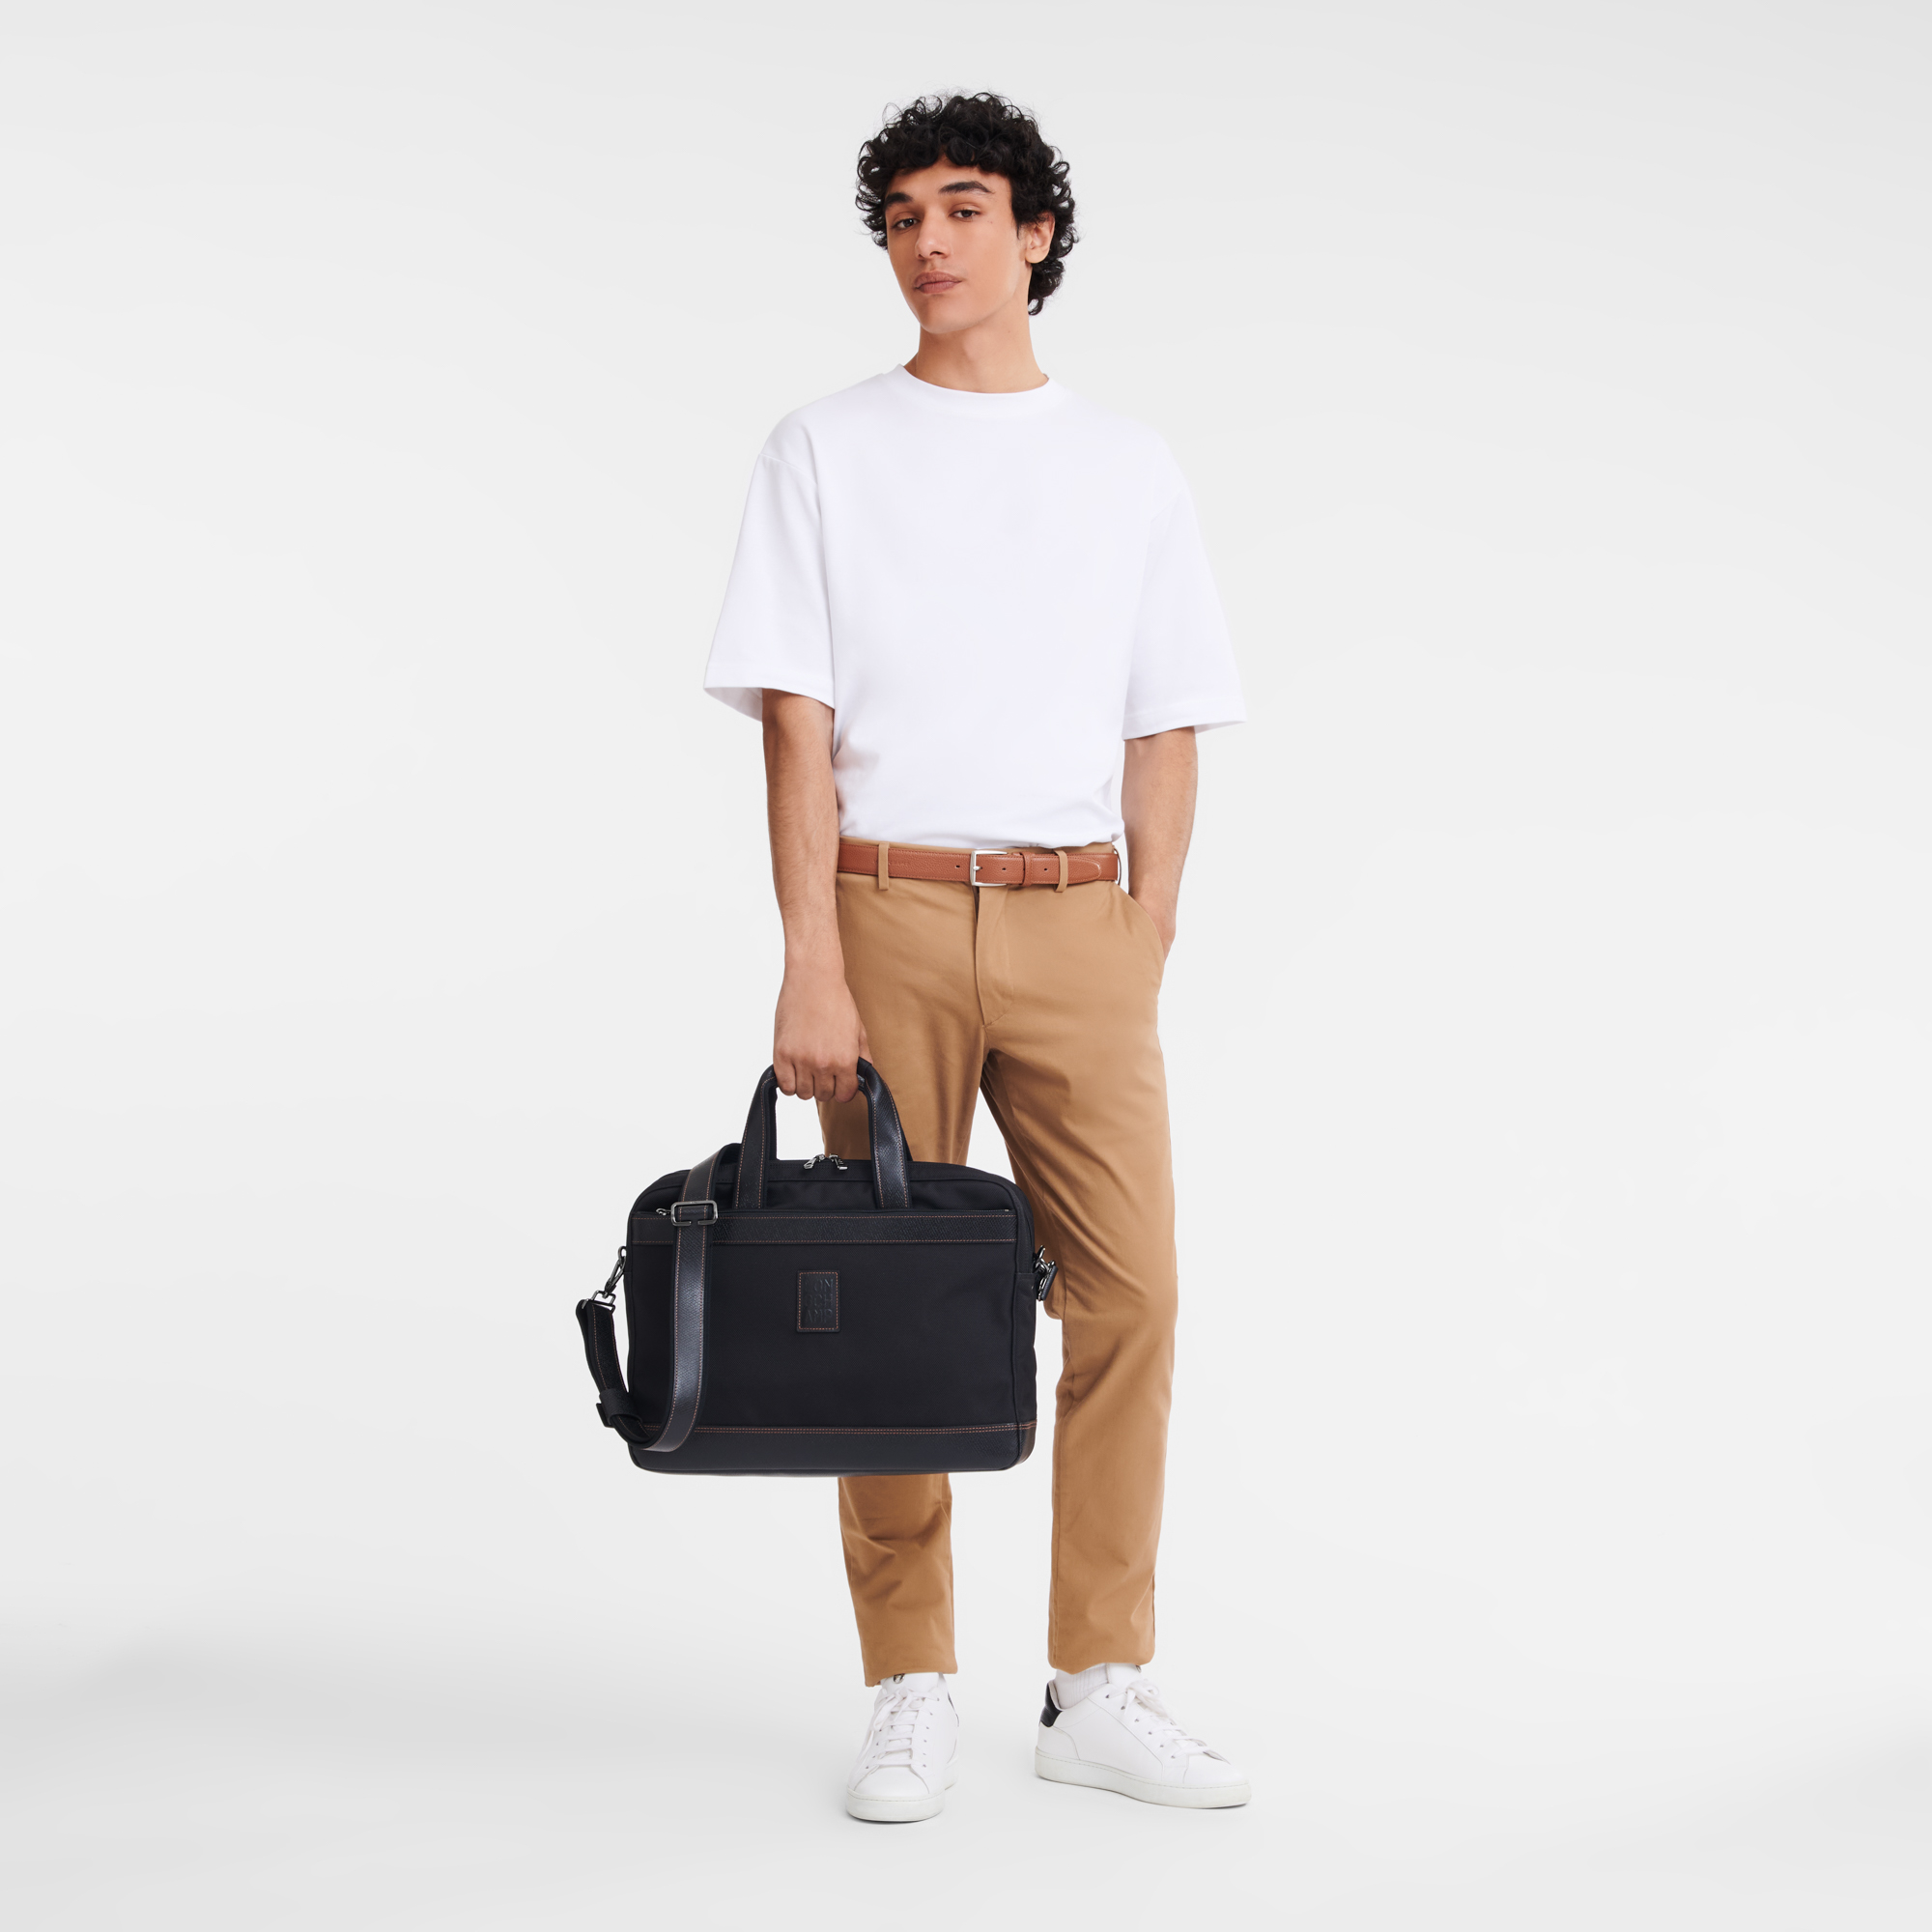 Shop Messenger Bag for Men, Briefcases Lightw – Luggage Factory